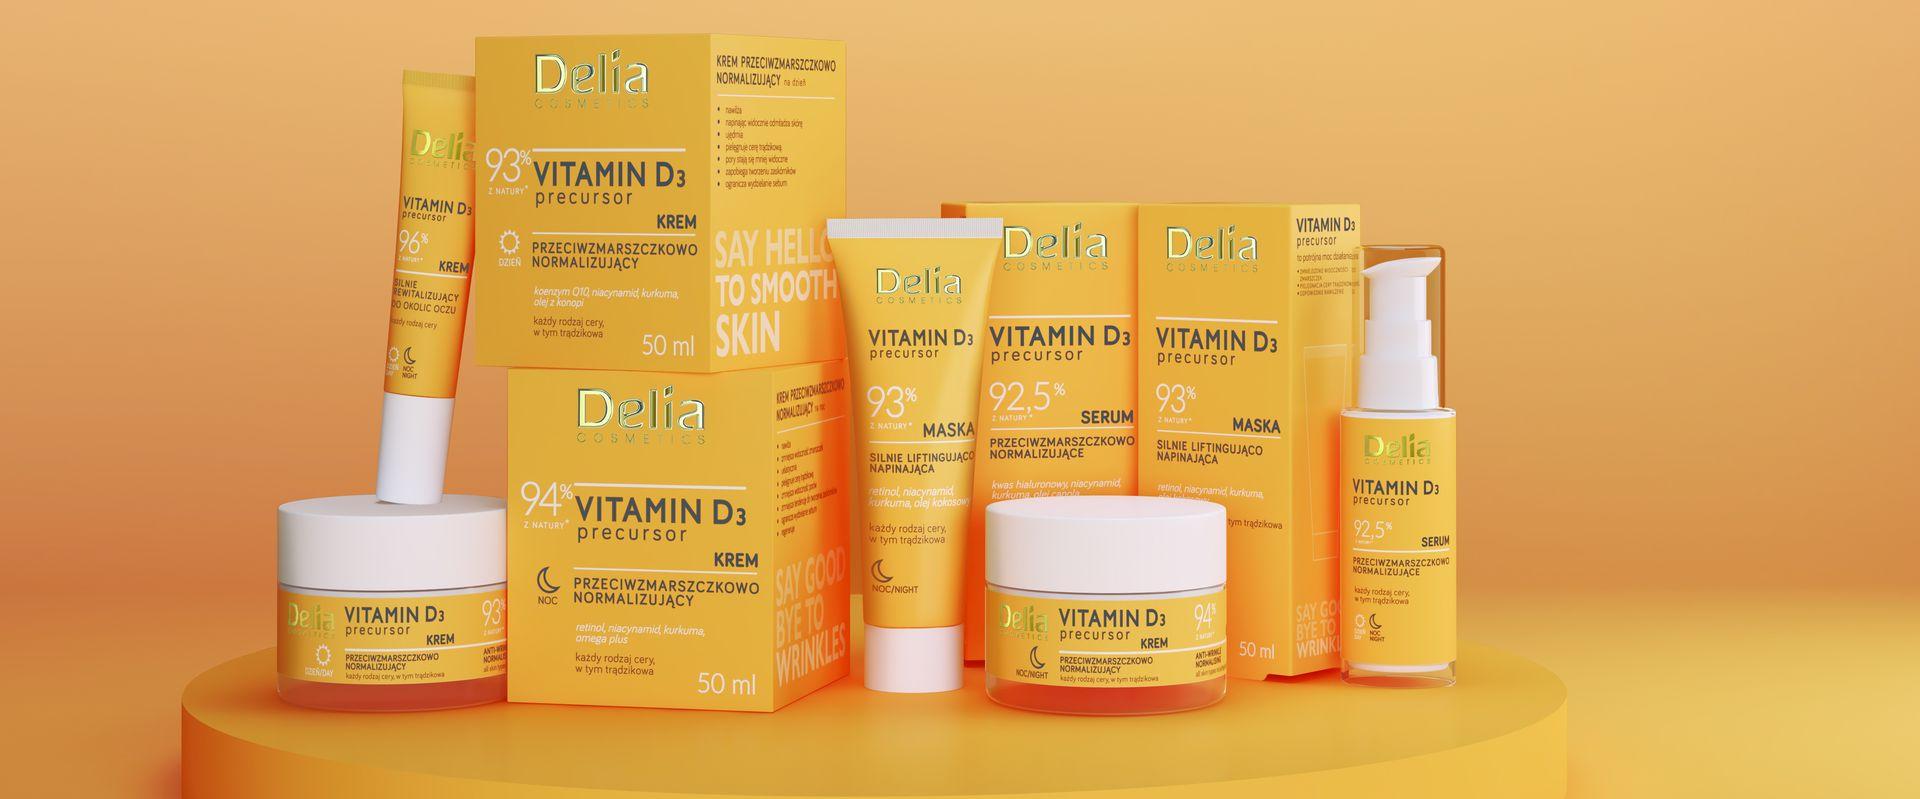 Pielęgnacja z Delia Precursor Vitamin D3